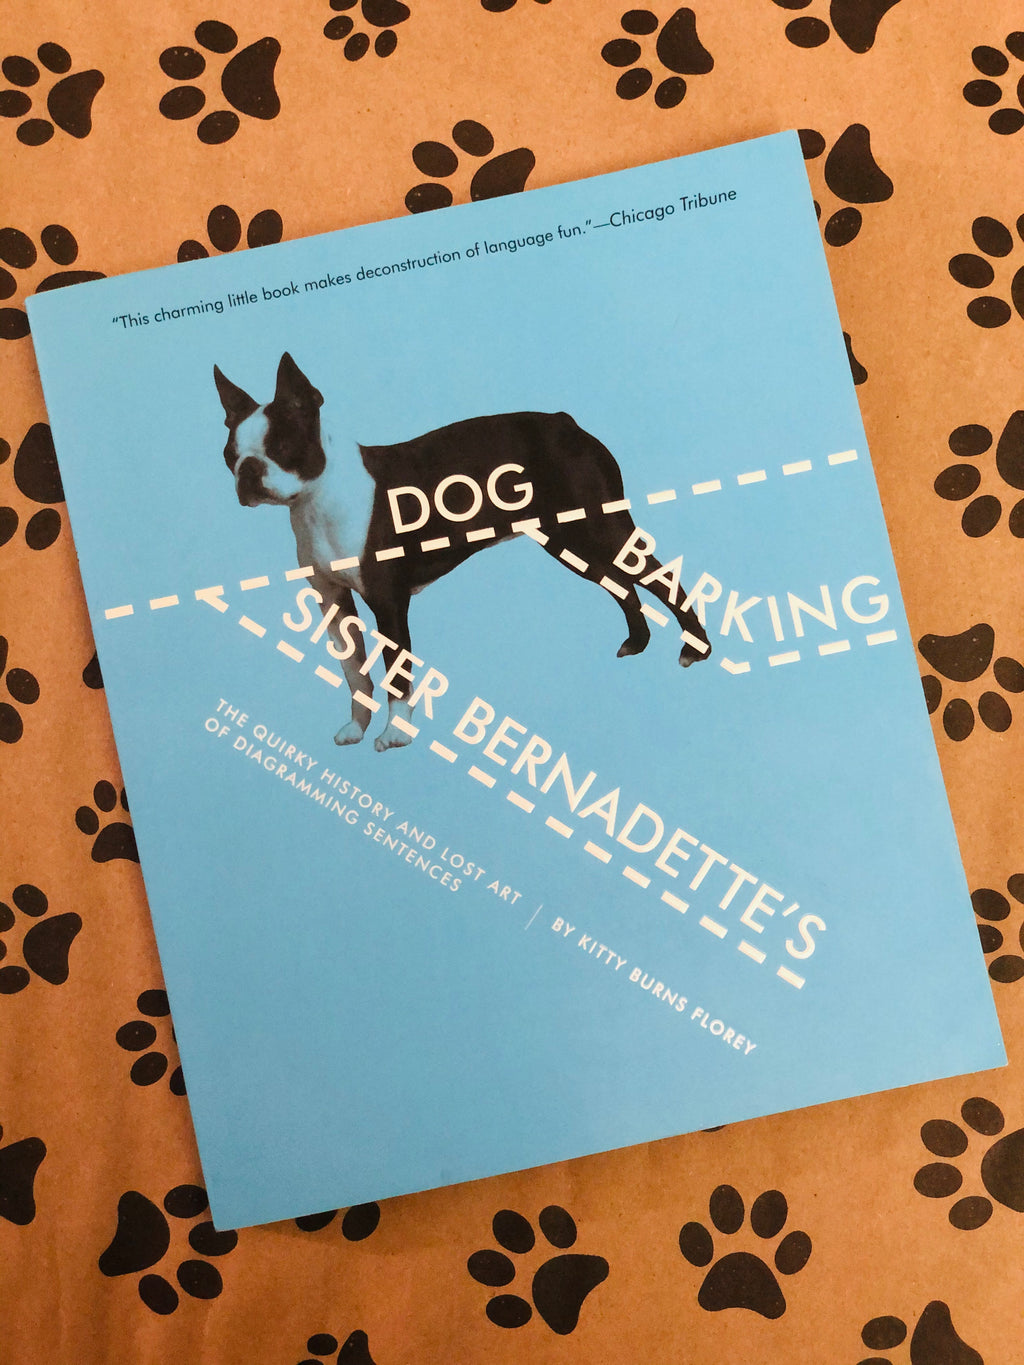 Sister Bernadette's Dog Barking- By Kitty Burns Florey